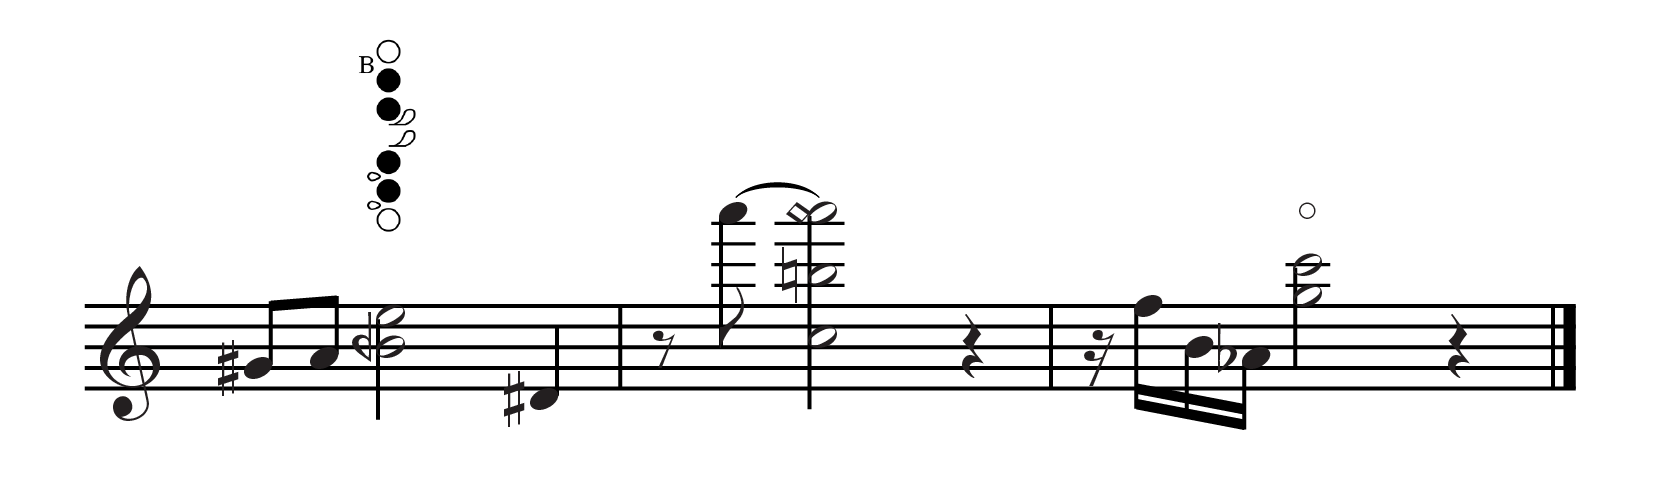 Notation of amultiphonics